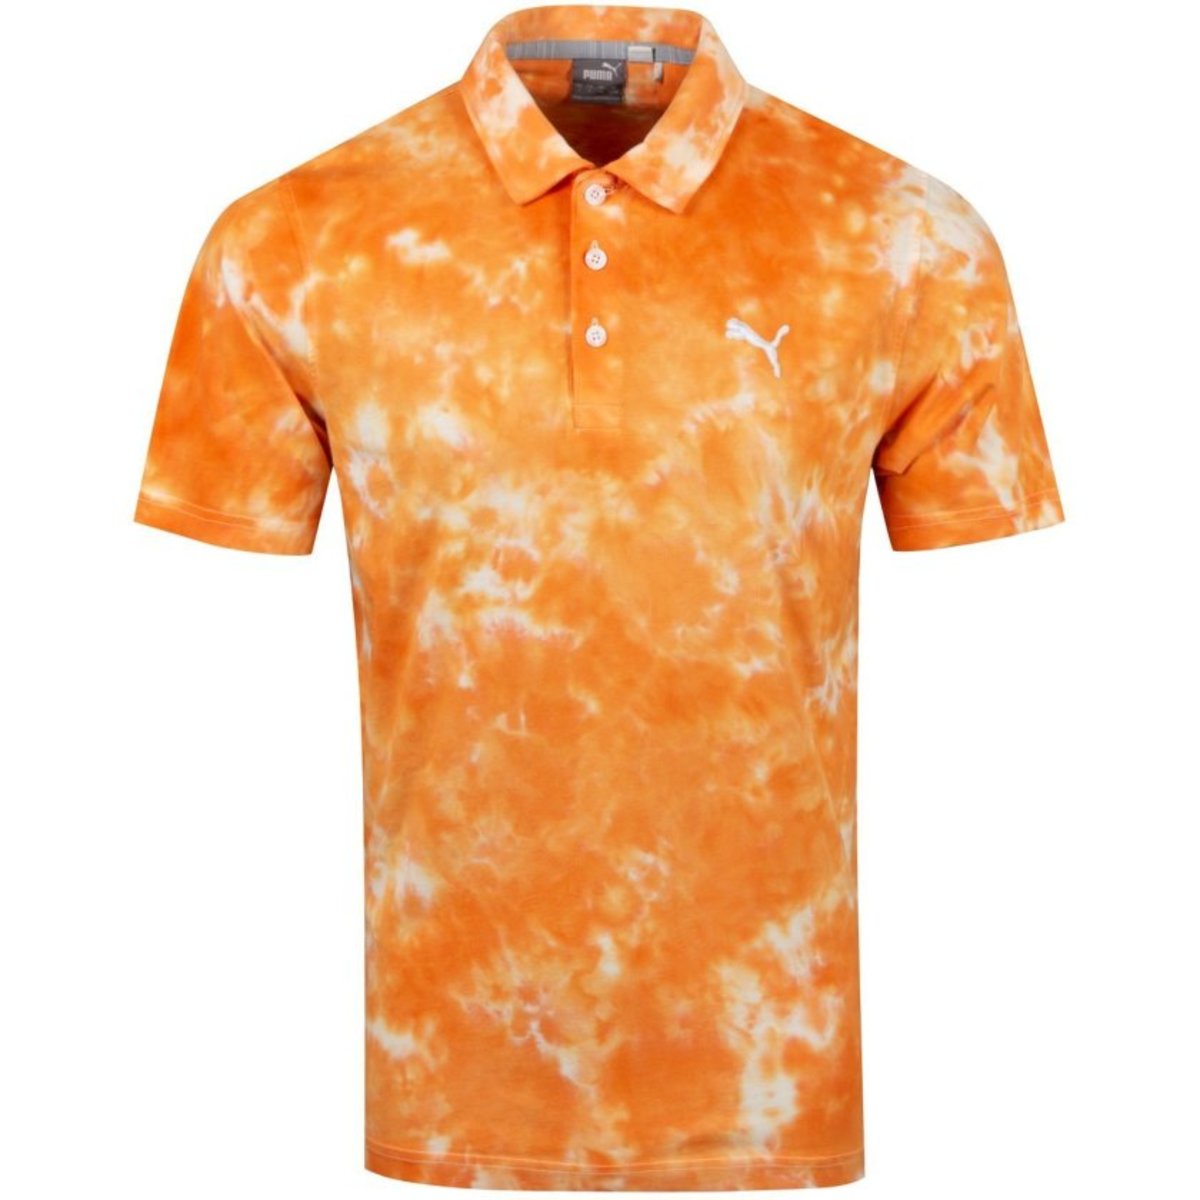 Puma Golf's Haight polo shirt in vibrant orange.